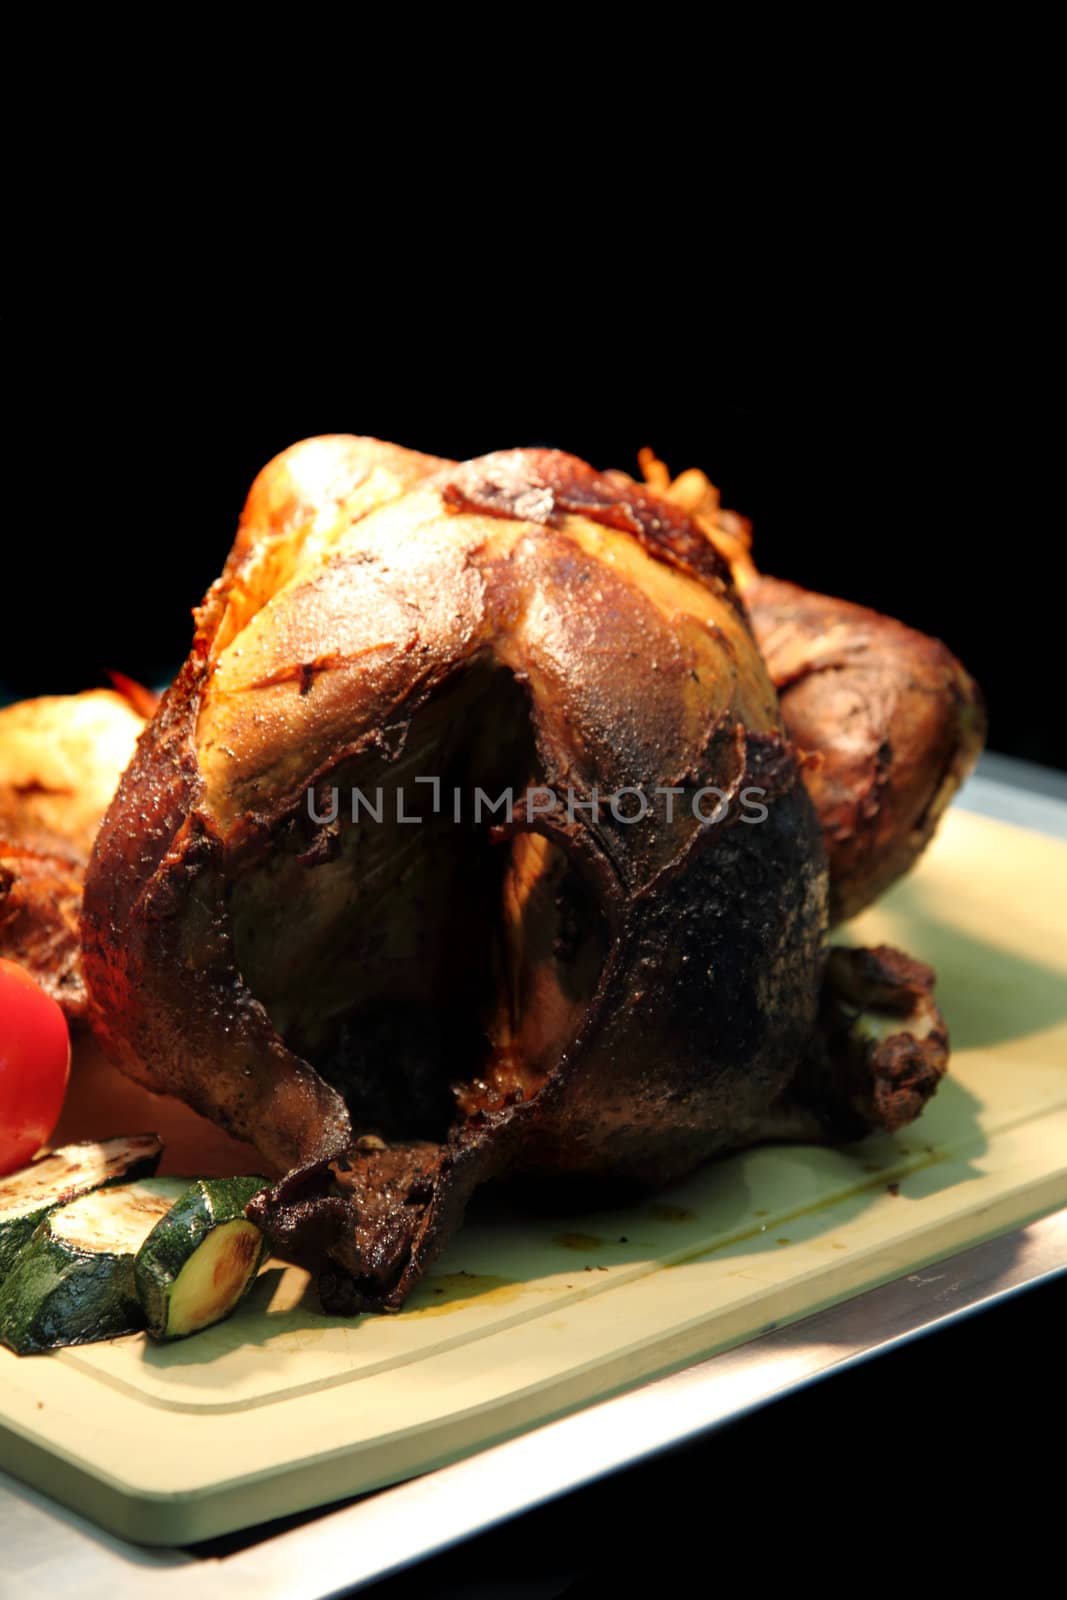 roasted turkey as nice and fresh food background 